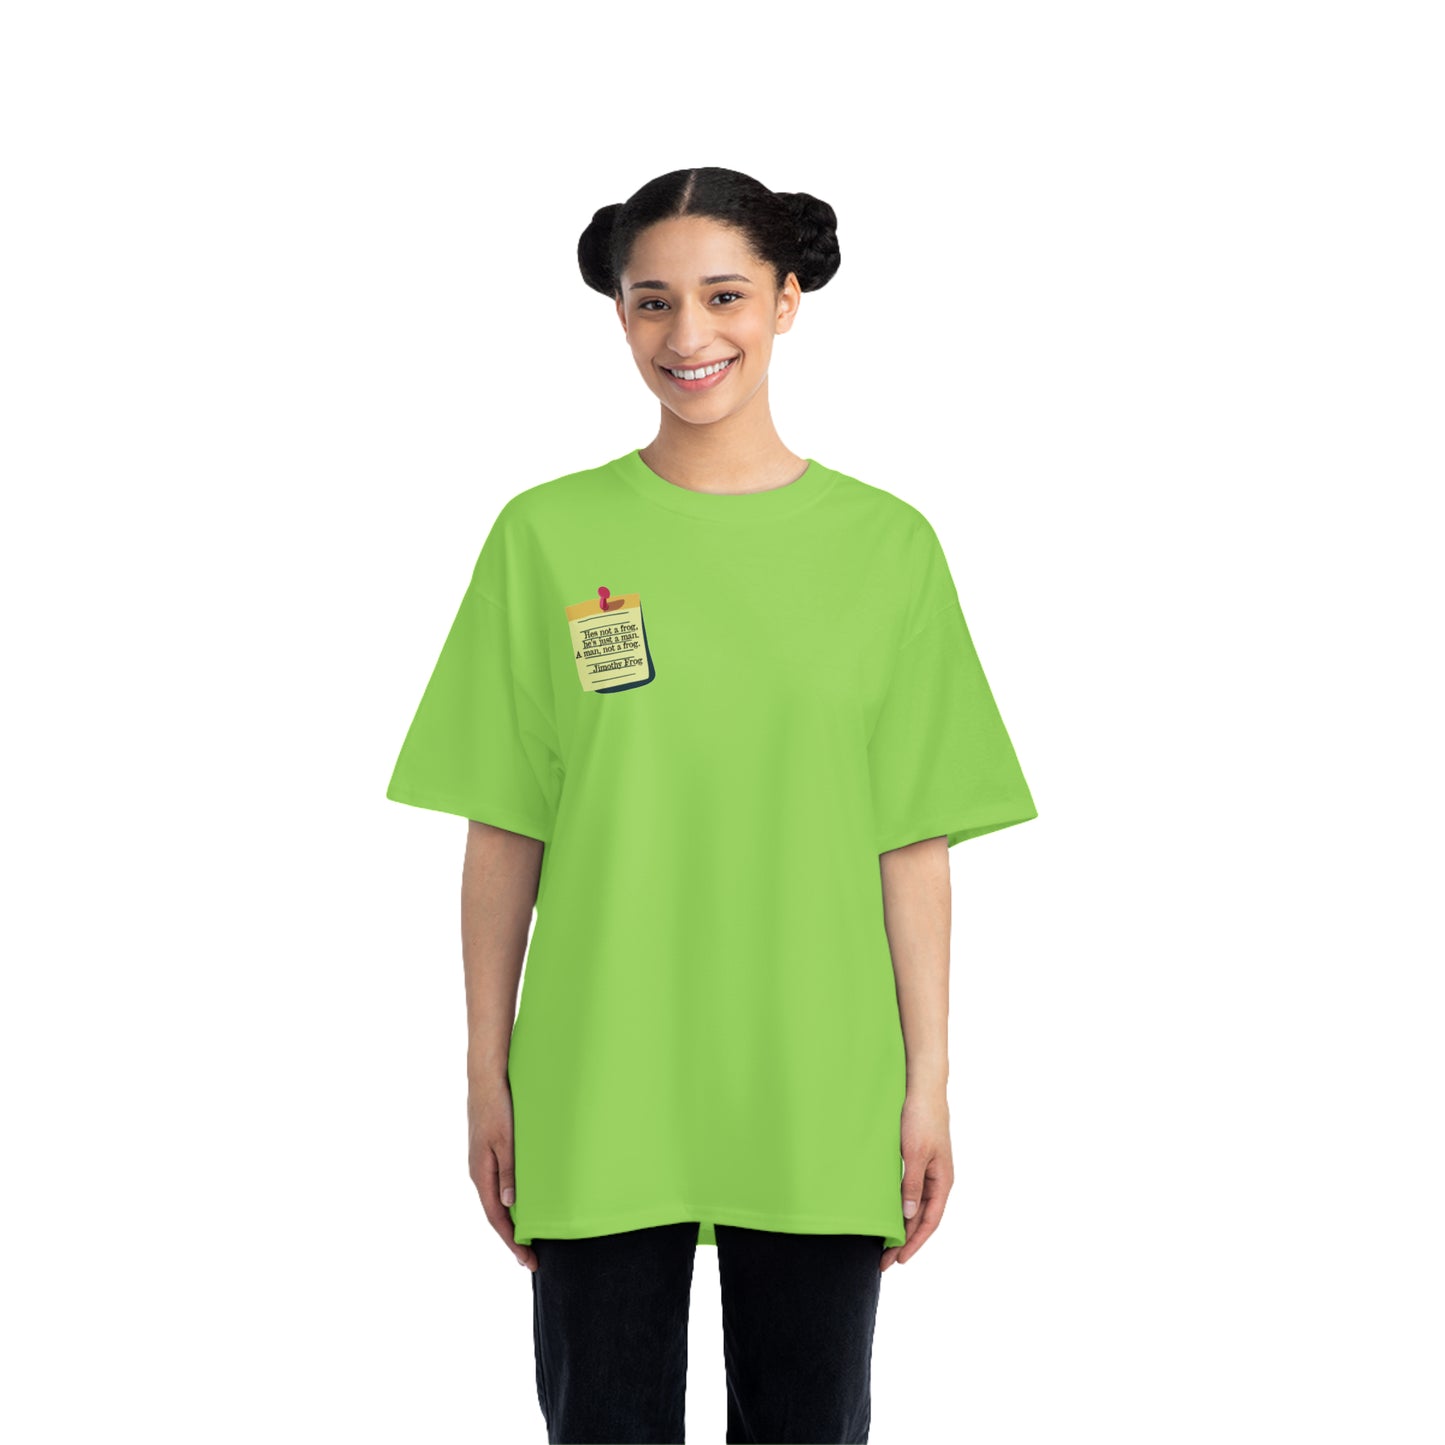 ZKILLASHERTZ   Jimothy Frog [Beefy T-Shirt]